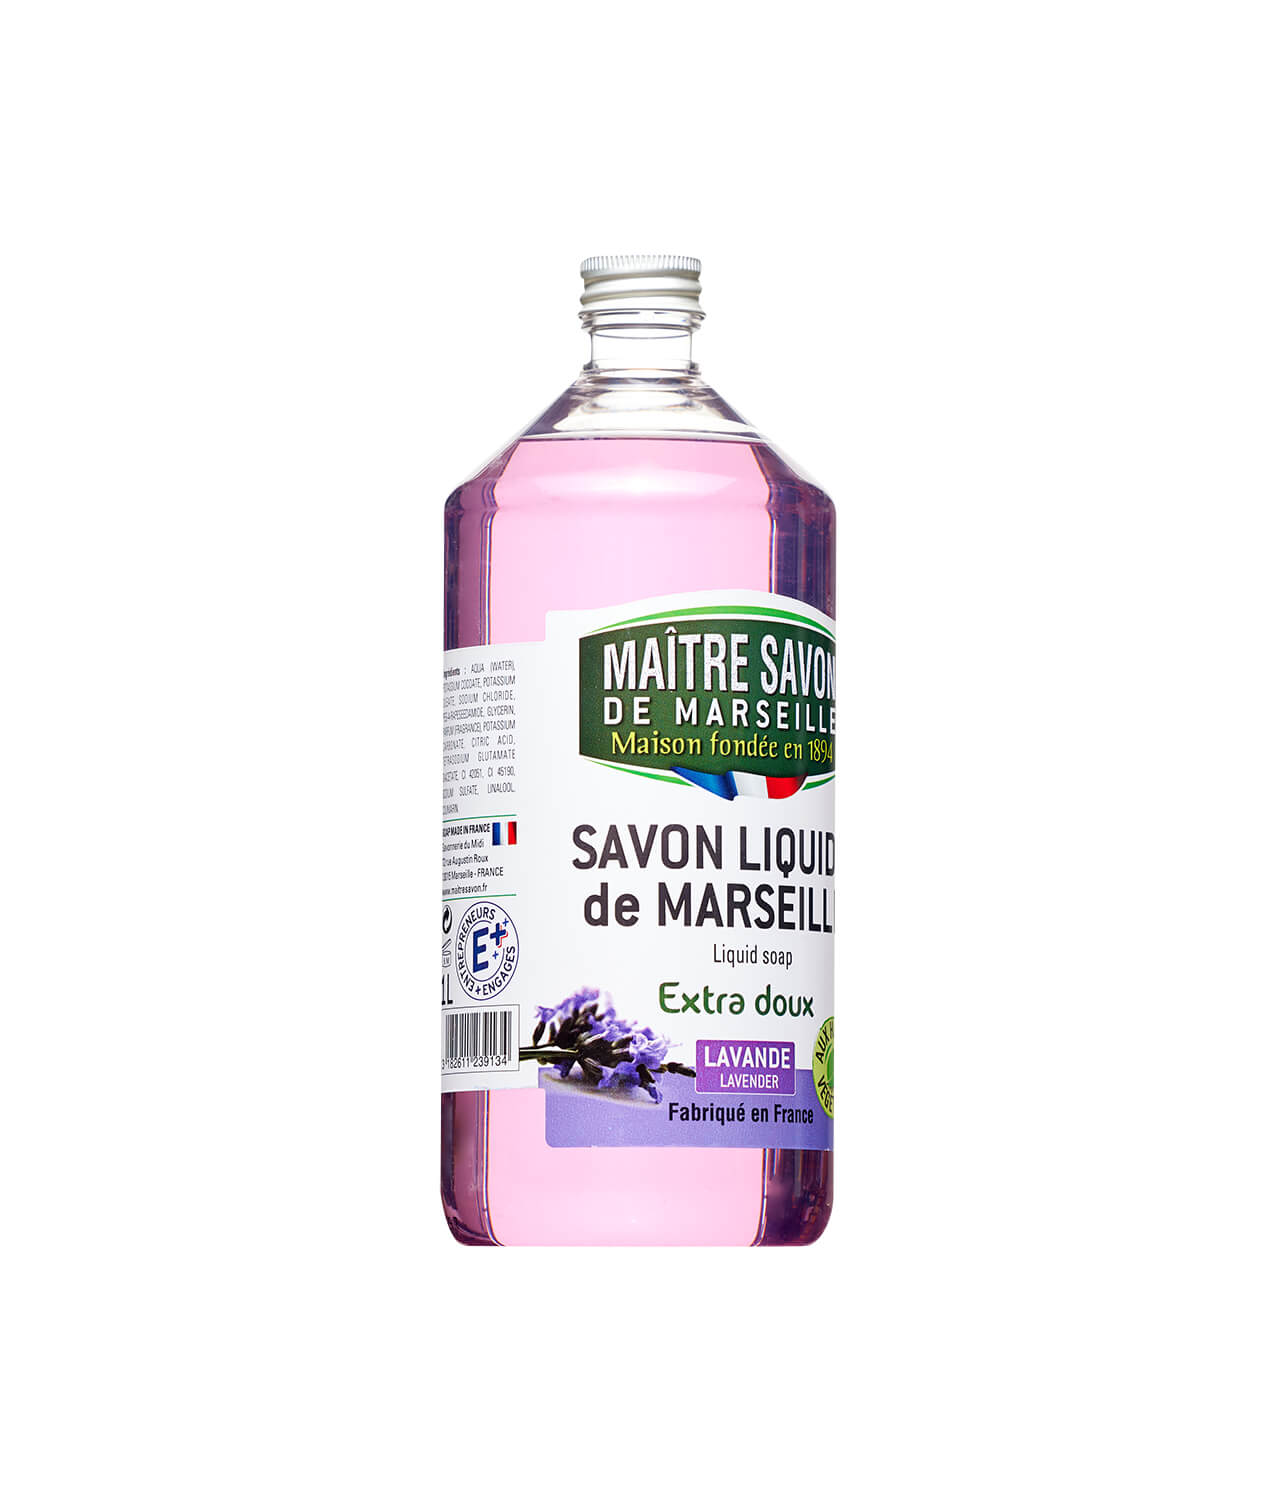 Maitre Savon de Marseille – Savon liquide de Marseille Extra doux